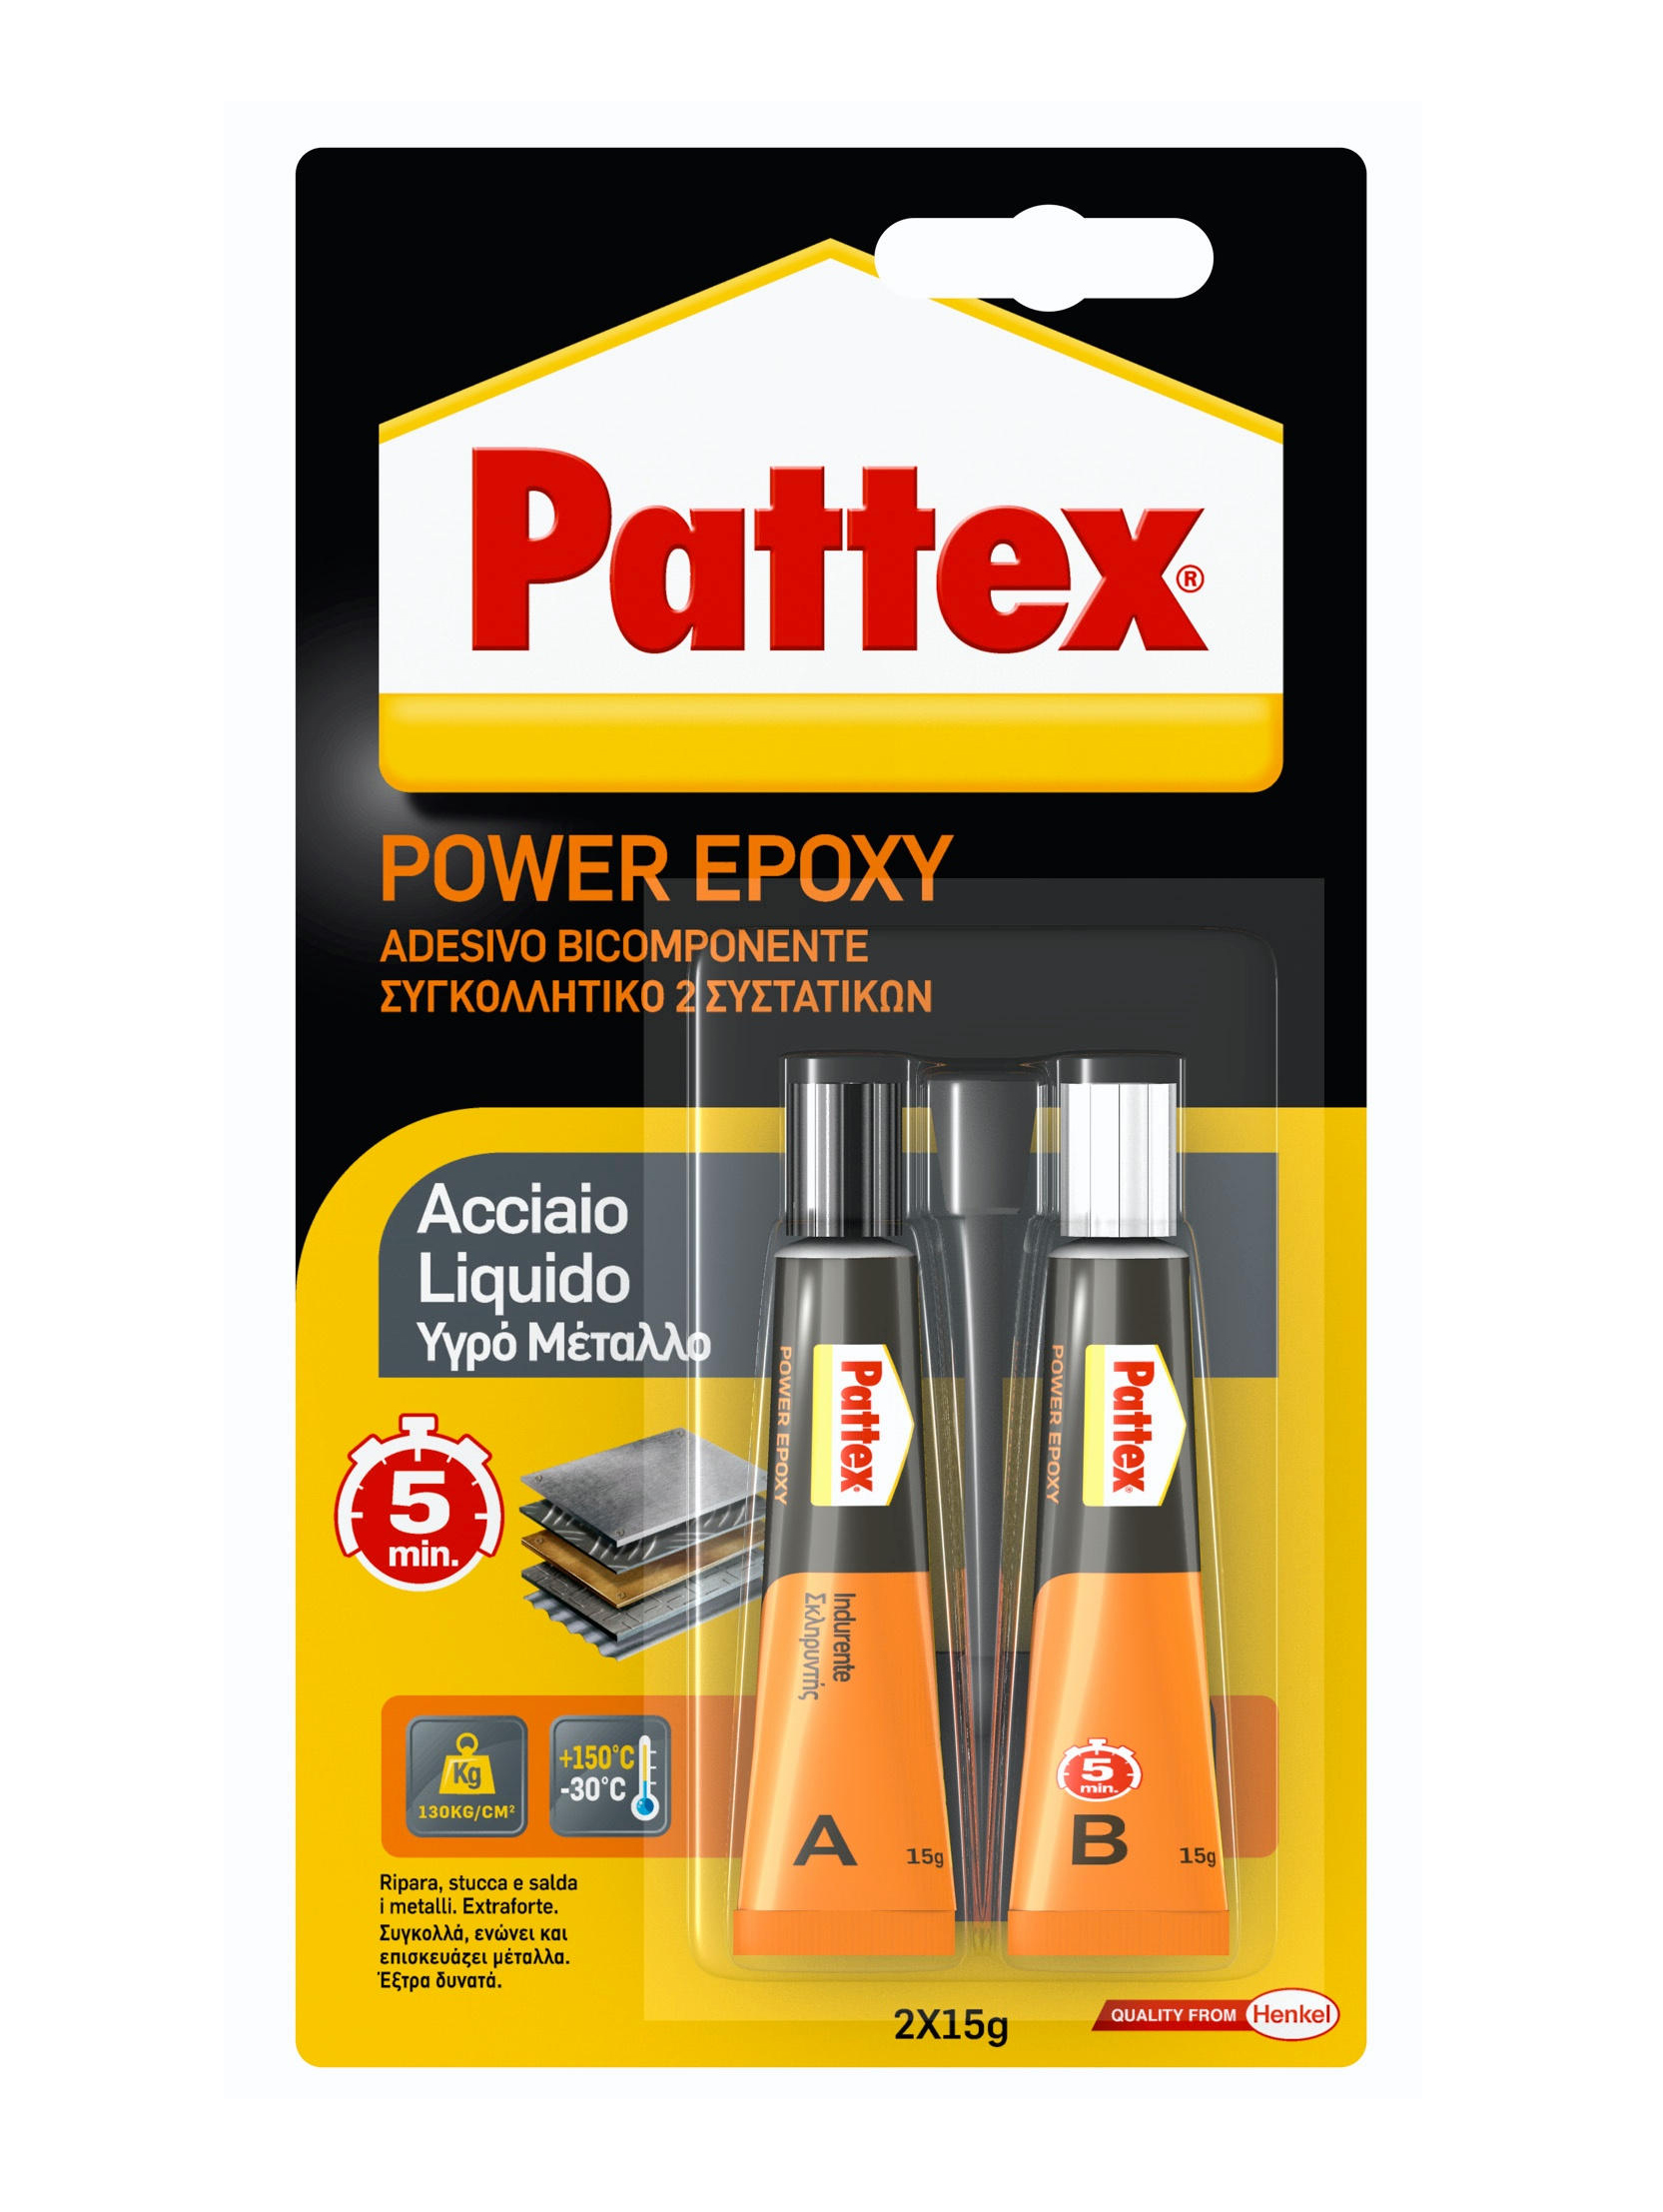 Pattex power epoxy acciaio liquido  30g